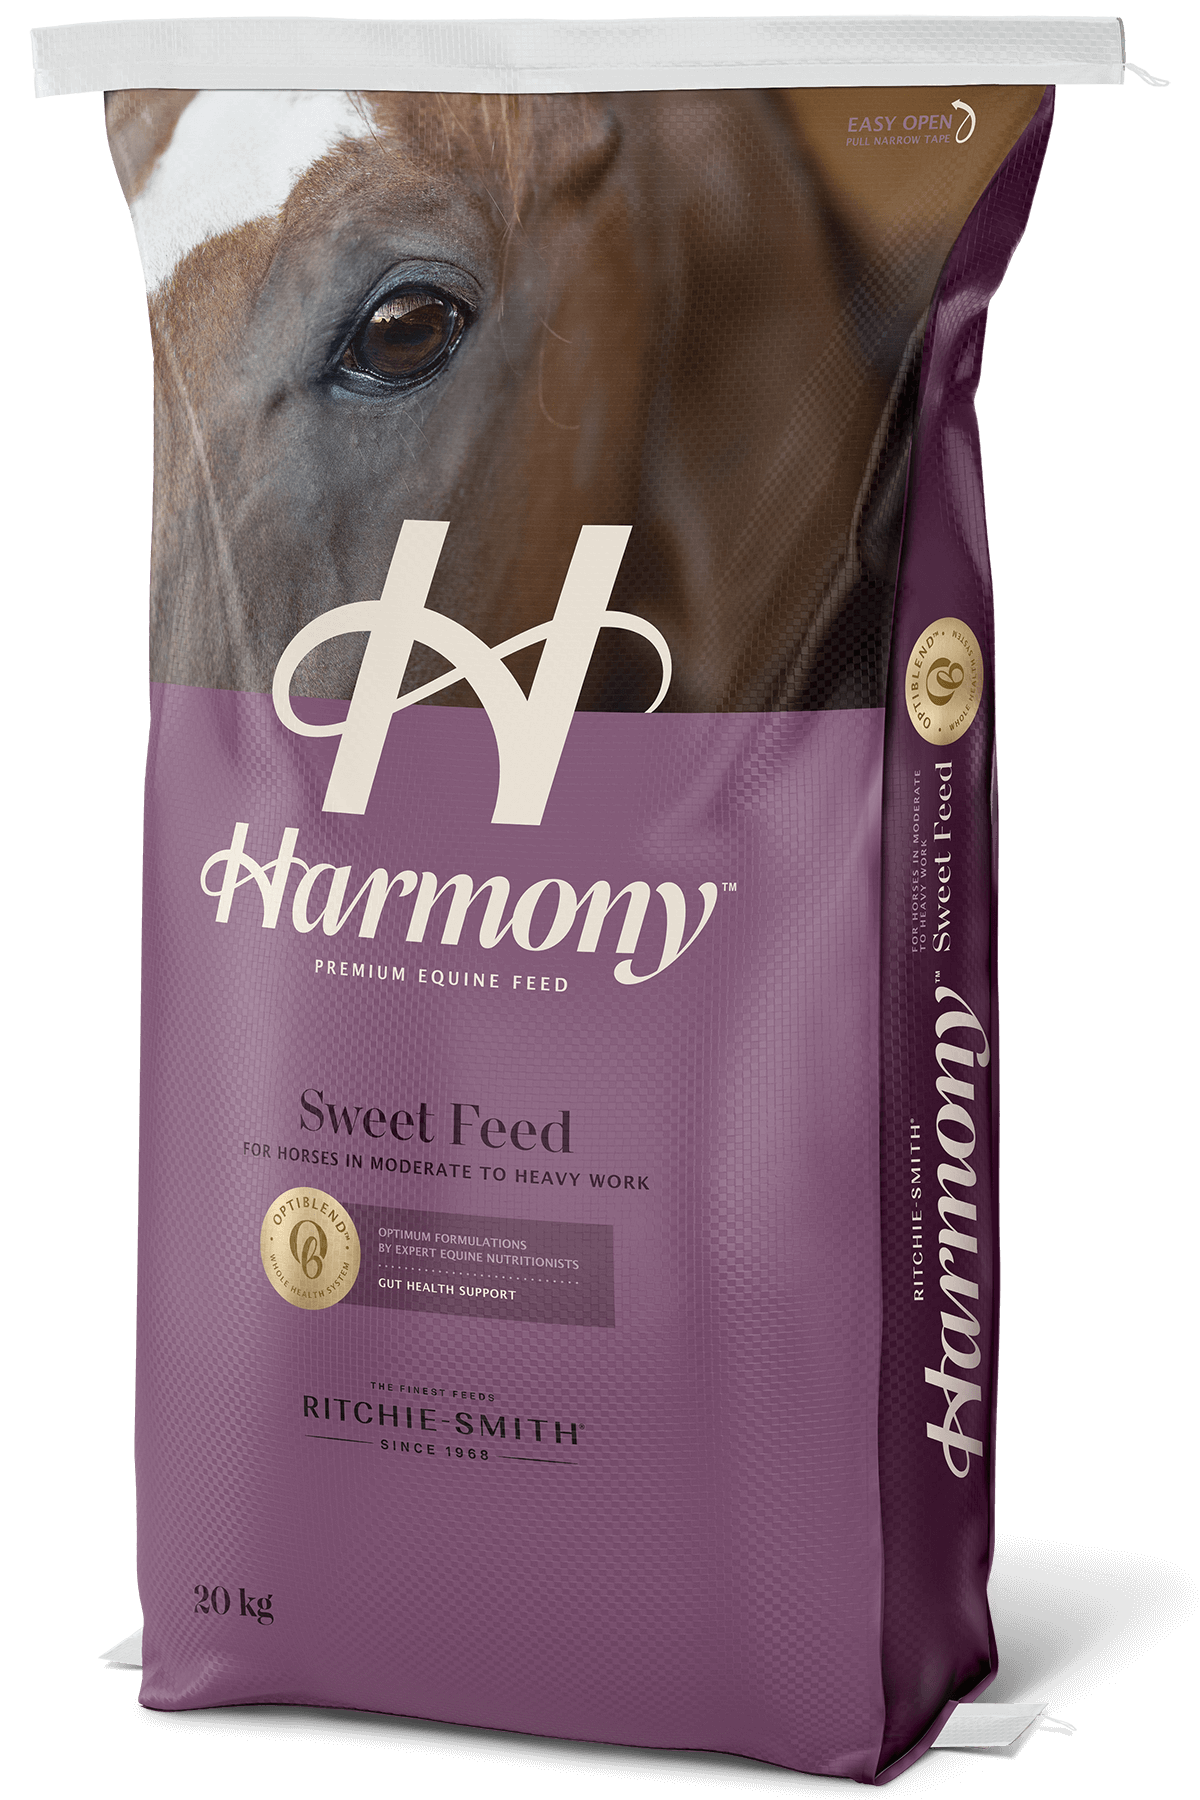 Sweet Feed by Harmony Premium Equine Feed